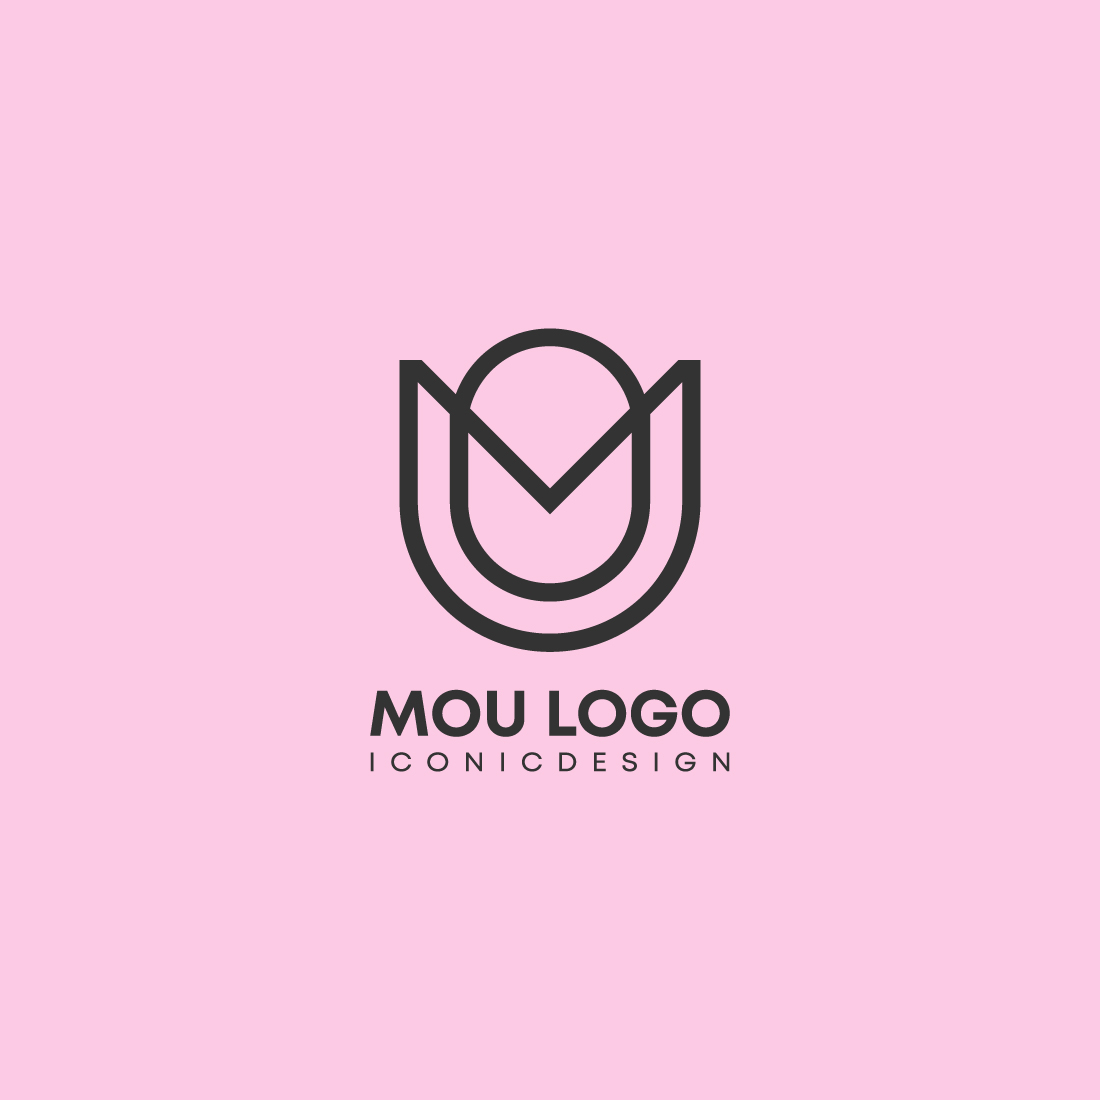 MOU logo preview image.